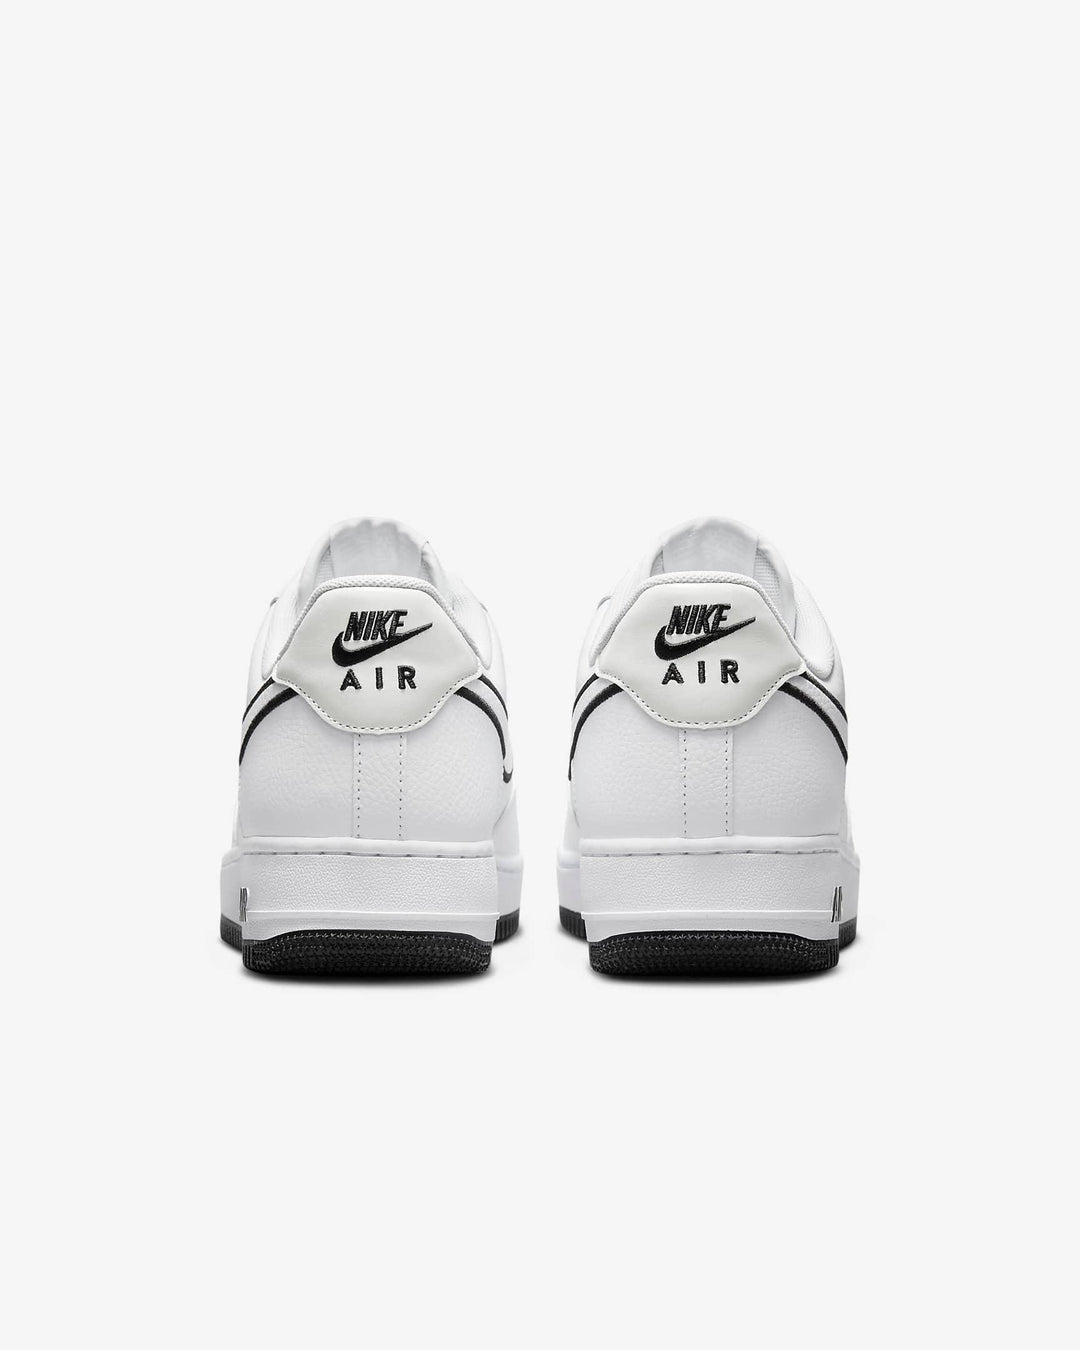 Giày Nike Air Force 1 '07 Men Shoes #White Black - Kallos Vietnam